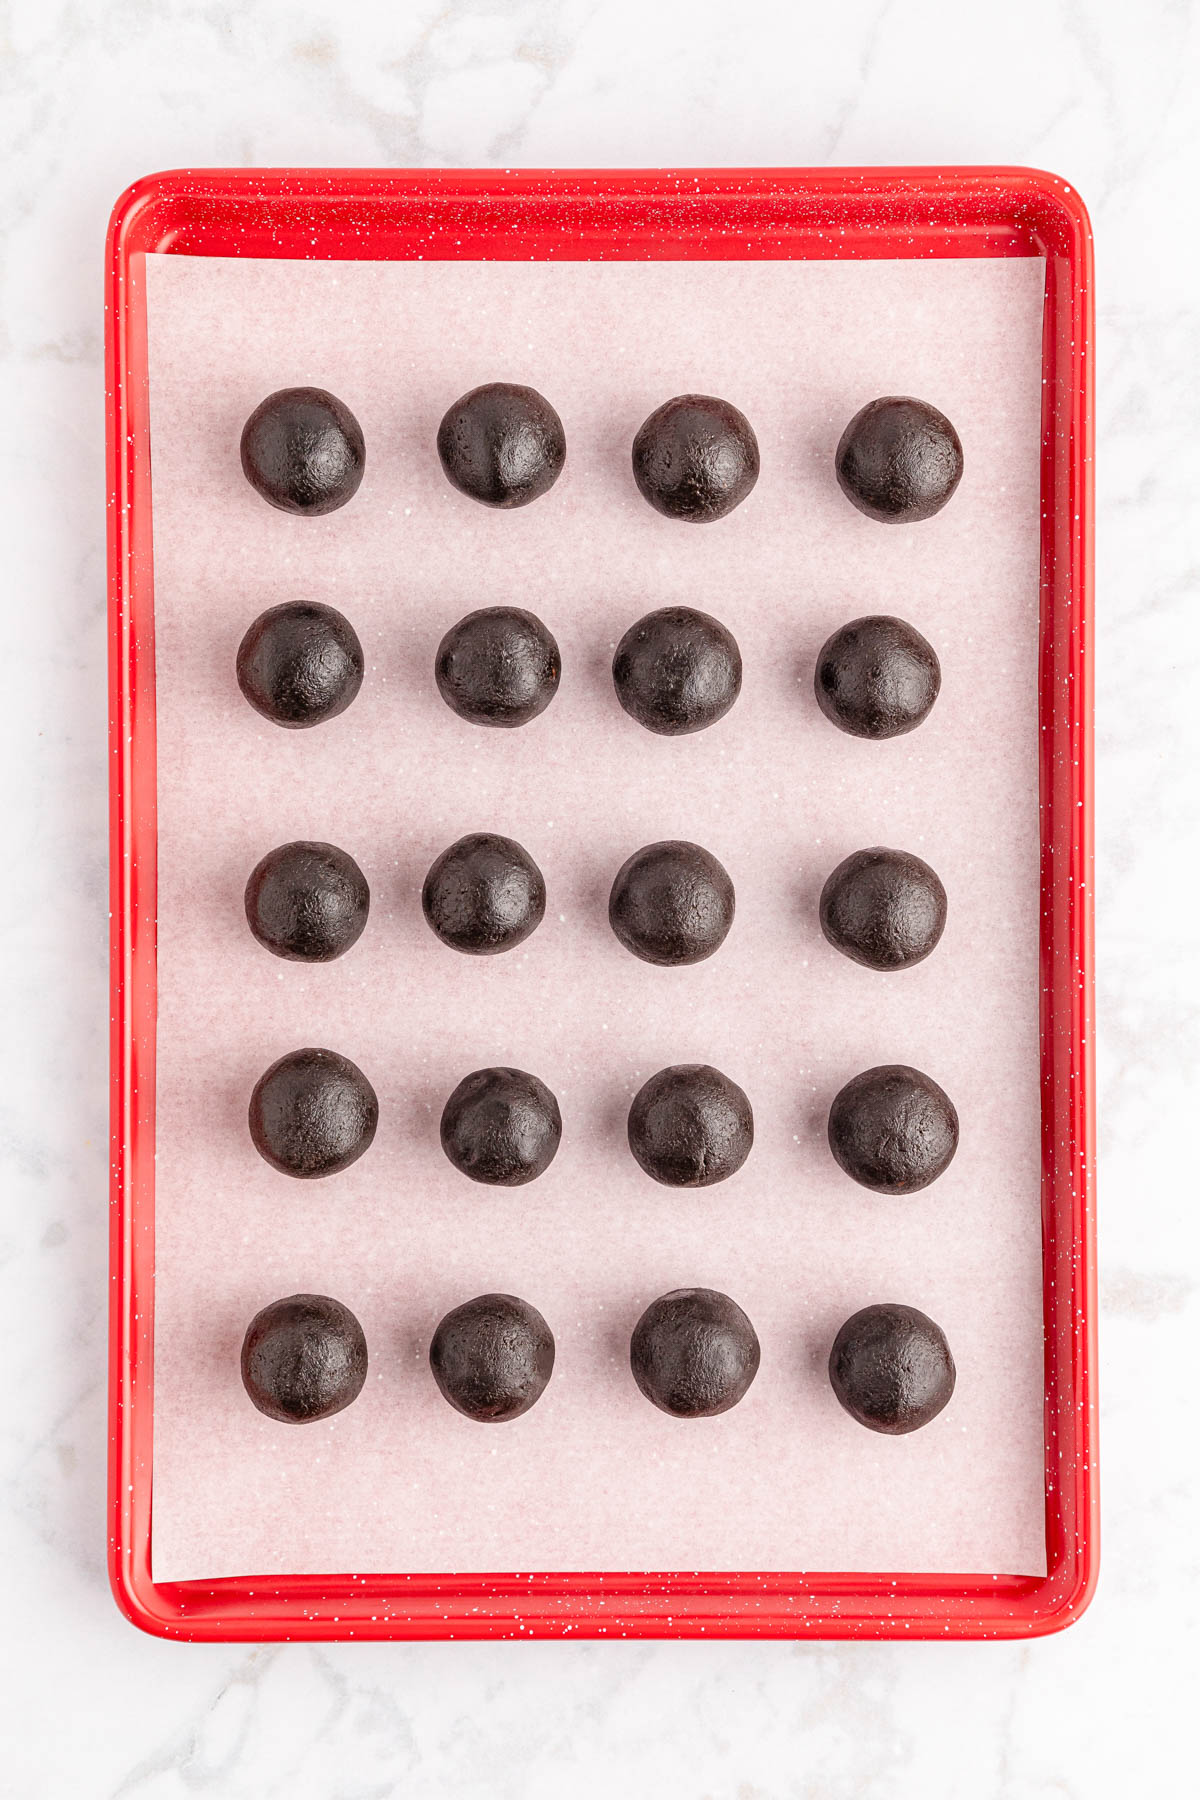 A tray of oreo balls on a marble countertop.